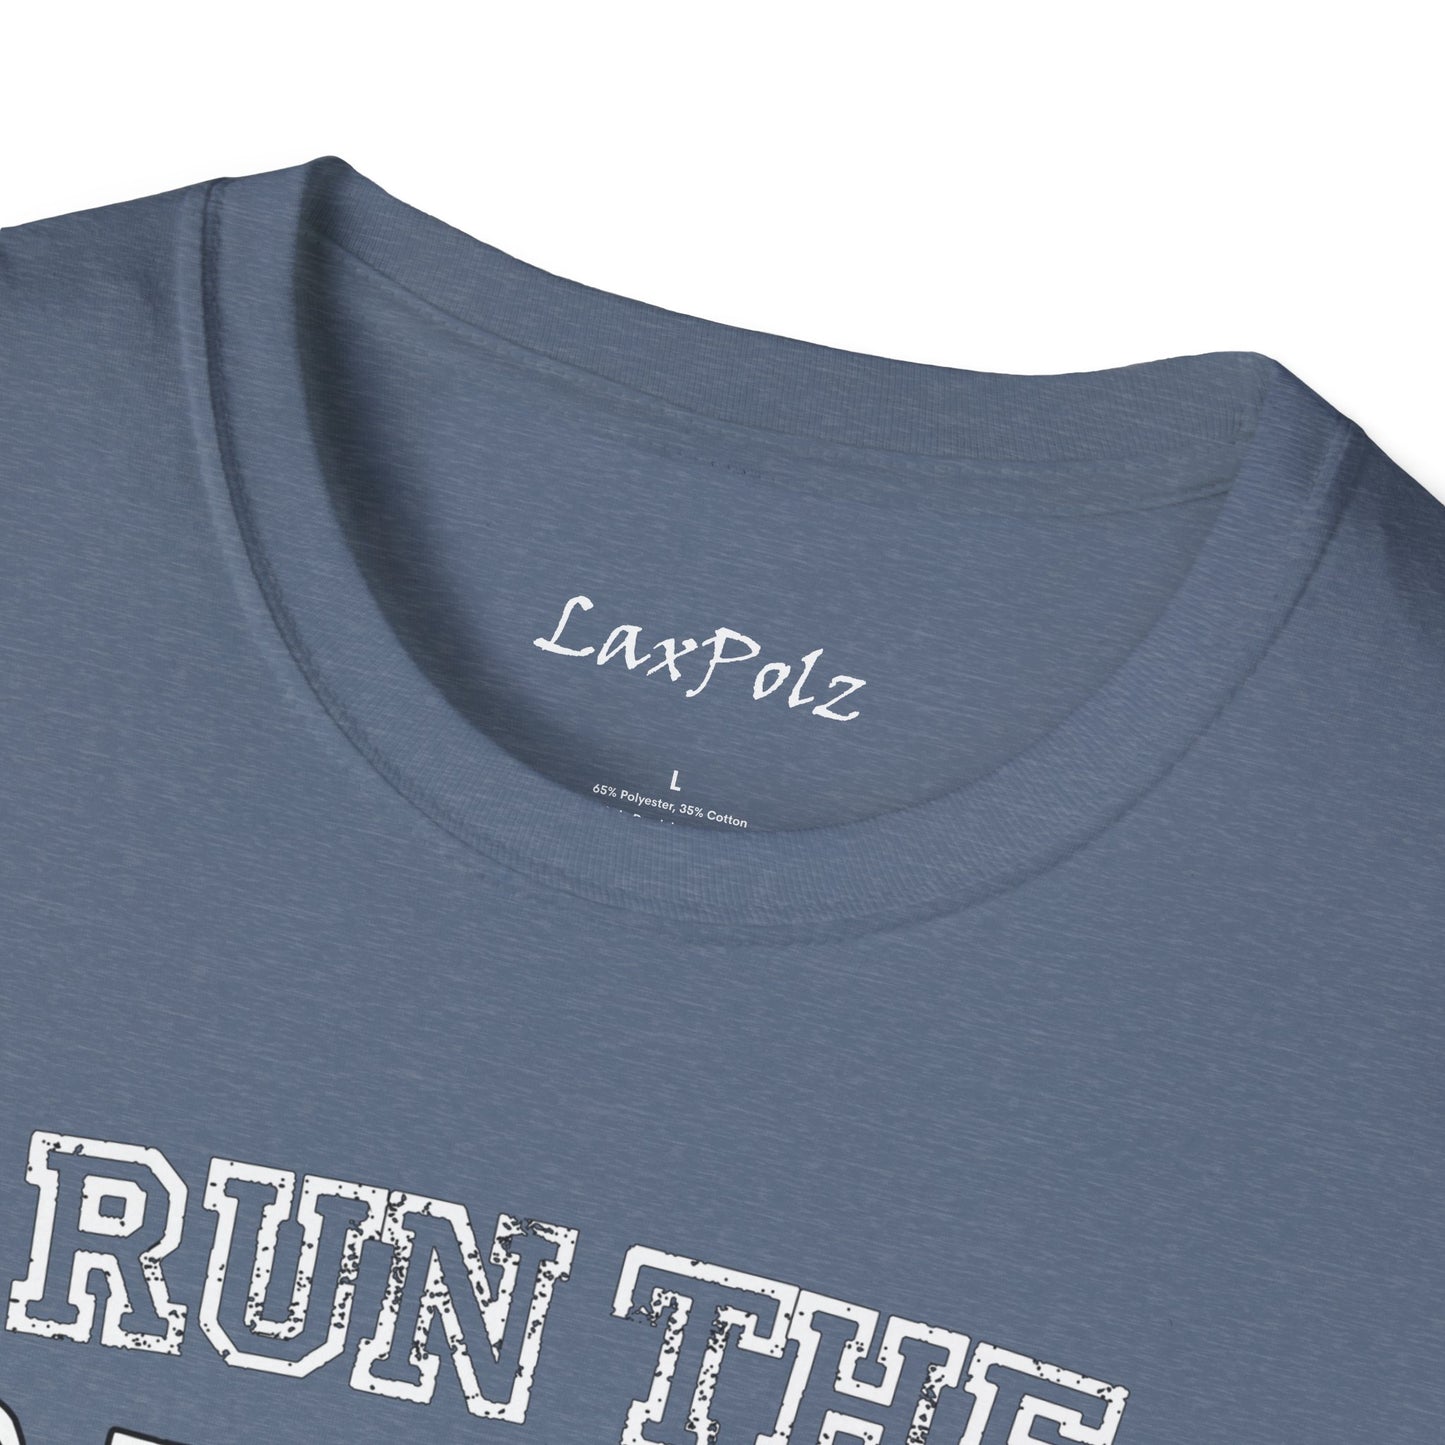 Run The Offense Softstyle T-Shirt